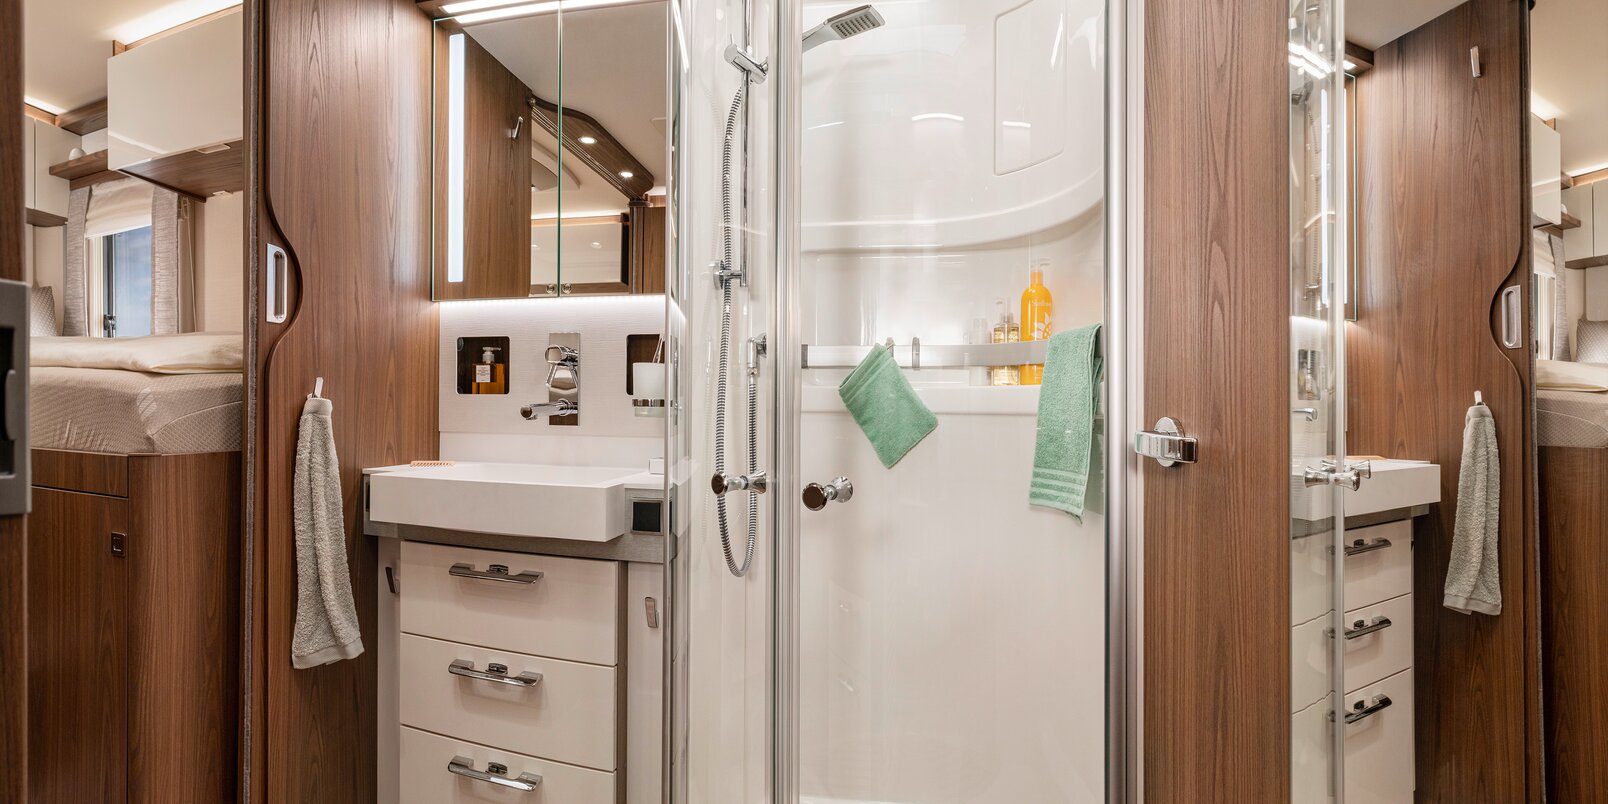 Salonbadkamer in de HYMER B-ML I 880: spiegelkast, lades onder de wastafel, aparte douche met echt glazen deuren, badkameraccessoires